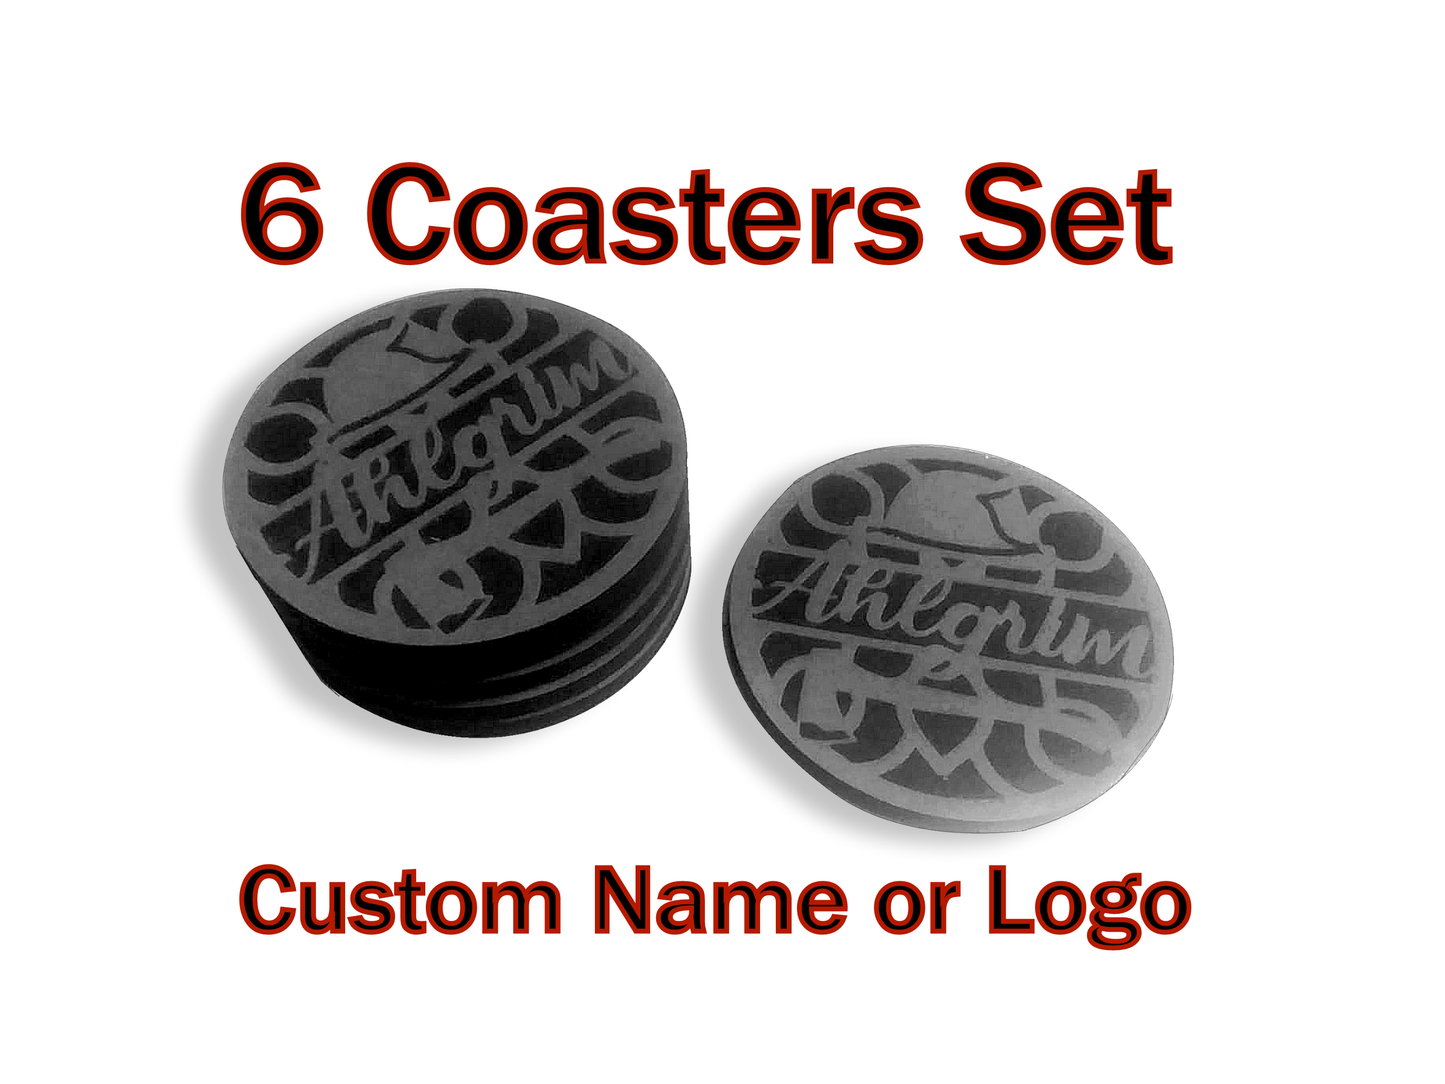 Personalized Coasters, Housewarming Gift, Custom Coasters, Wedding, any name or logo